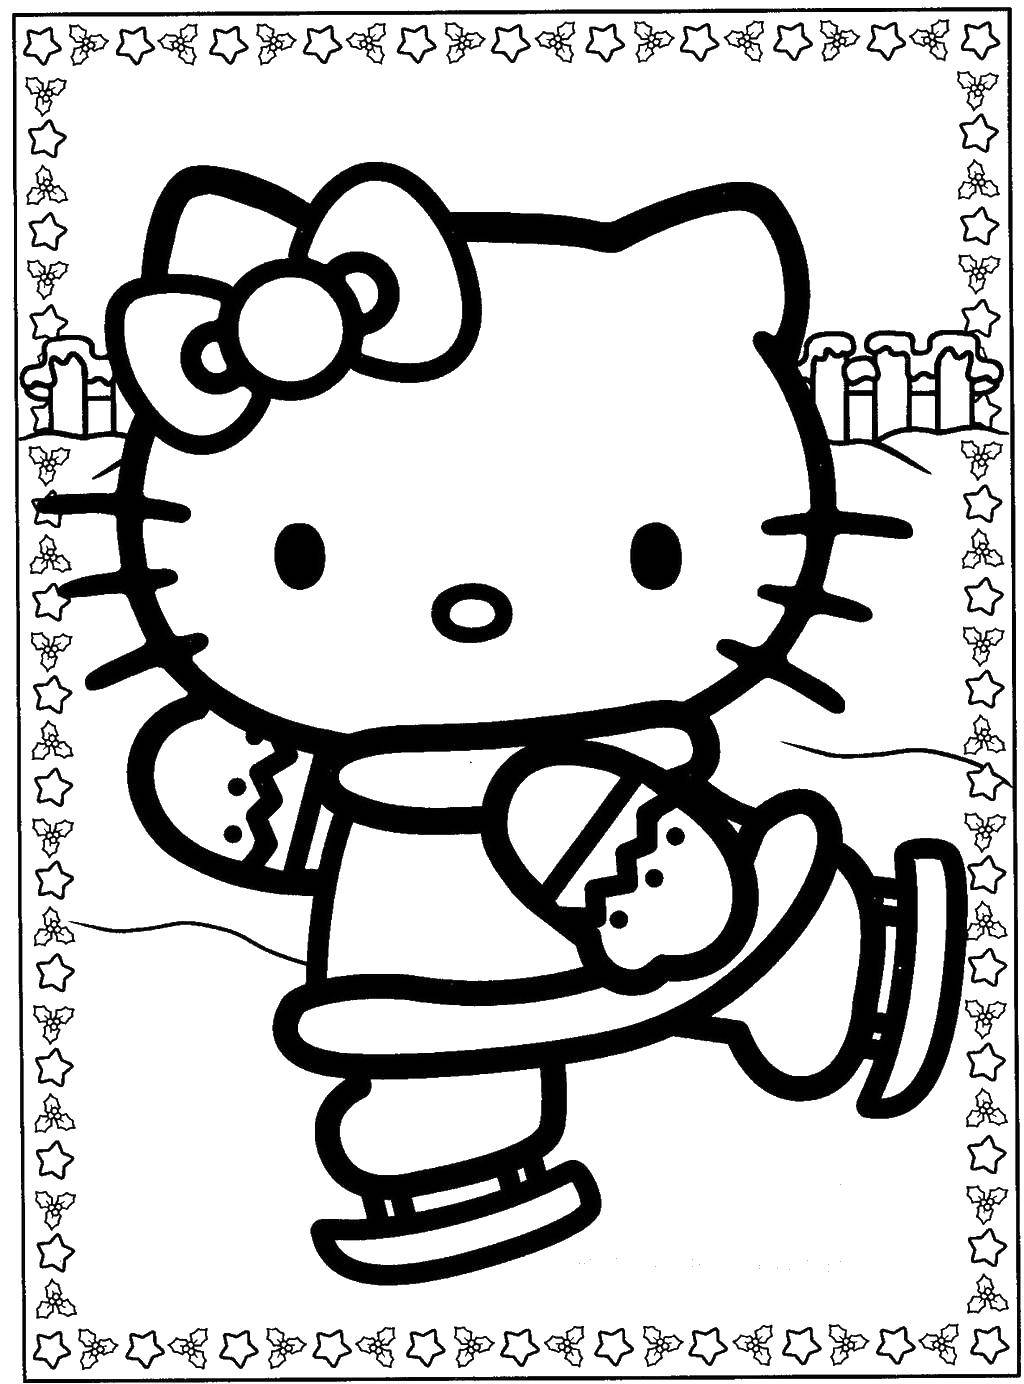 Coloring Hello kitty on skates. Category Hello Kitty. Tags:  Hello kitty, kitty, cat, skates.